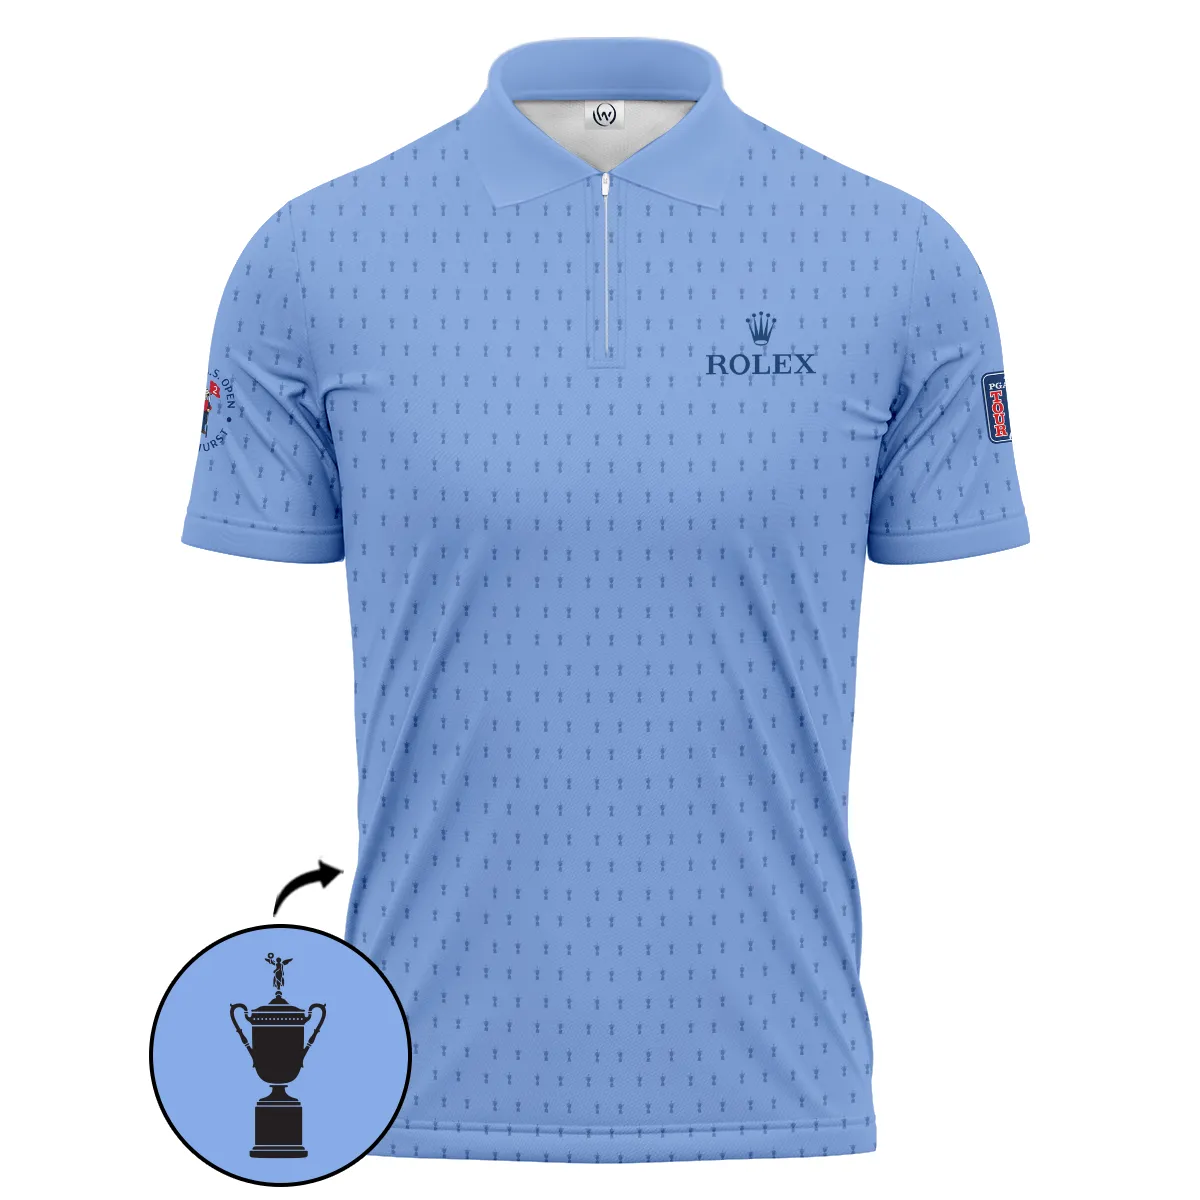 Golf Pattern Cup Blue 124th U.S. Open Pinehurst Pinehurst Rolex Hoodie Shirt Style Classic